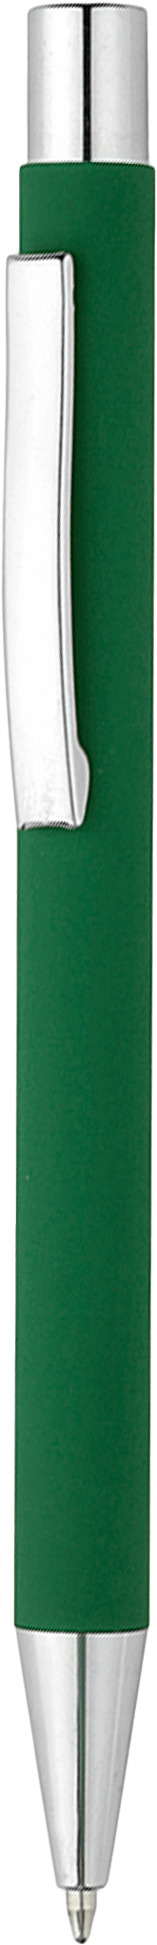 Ручка MAX SOFT MIRROR, зеленая